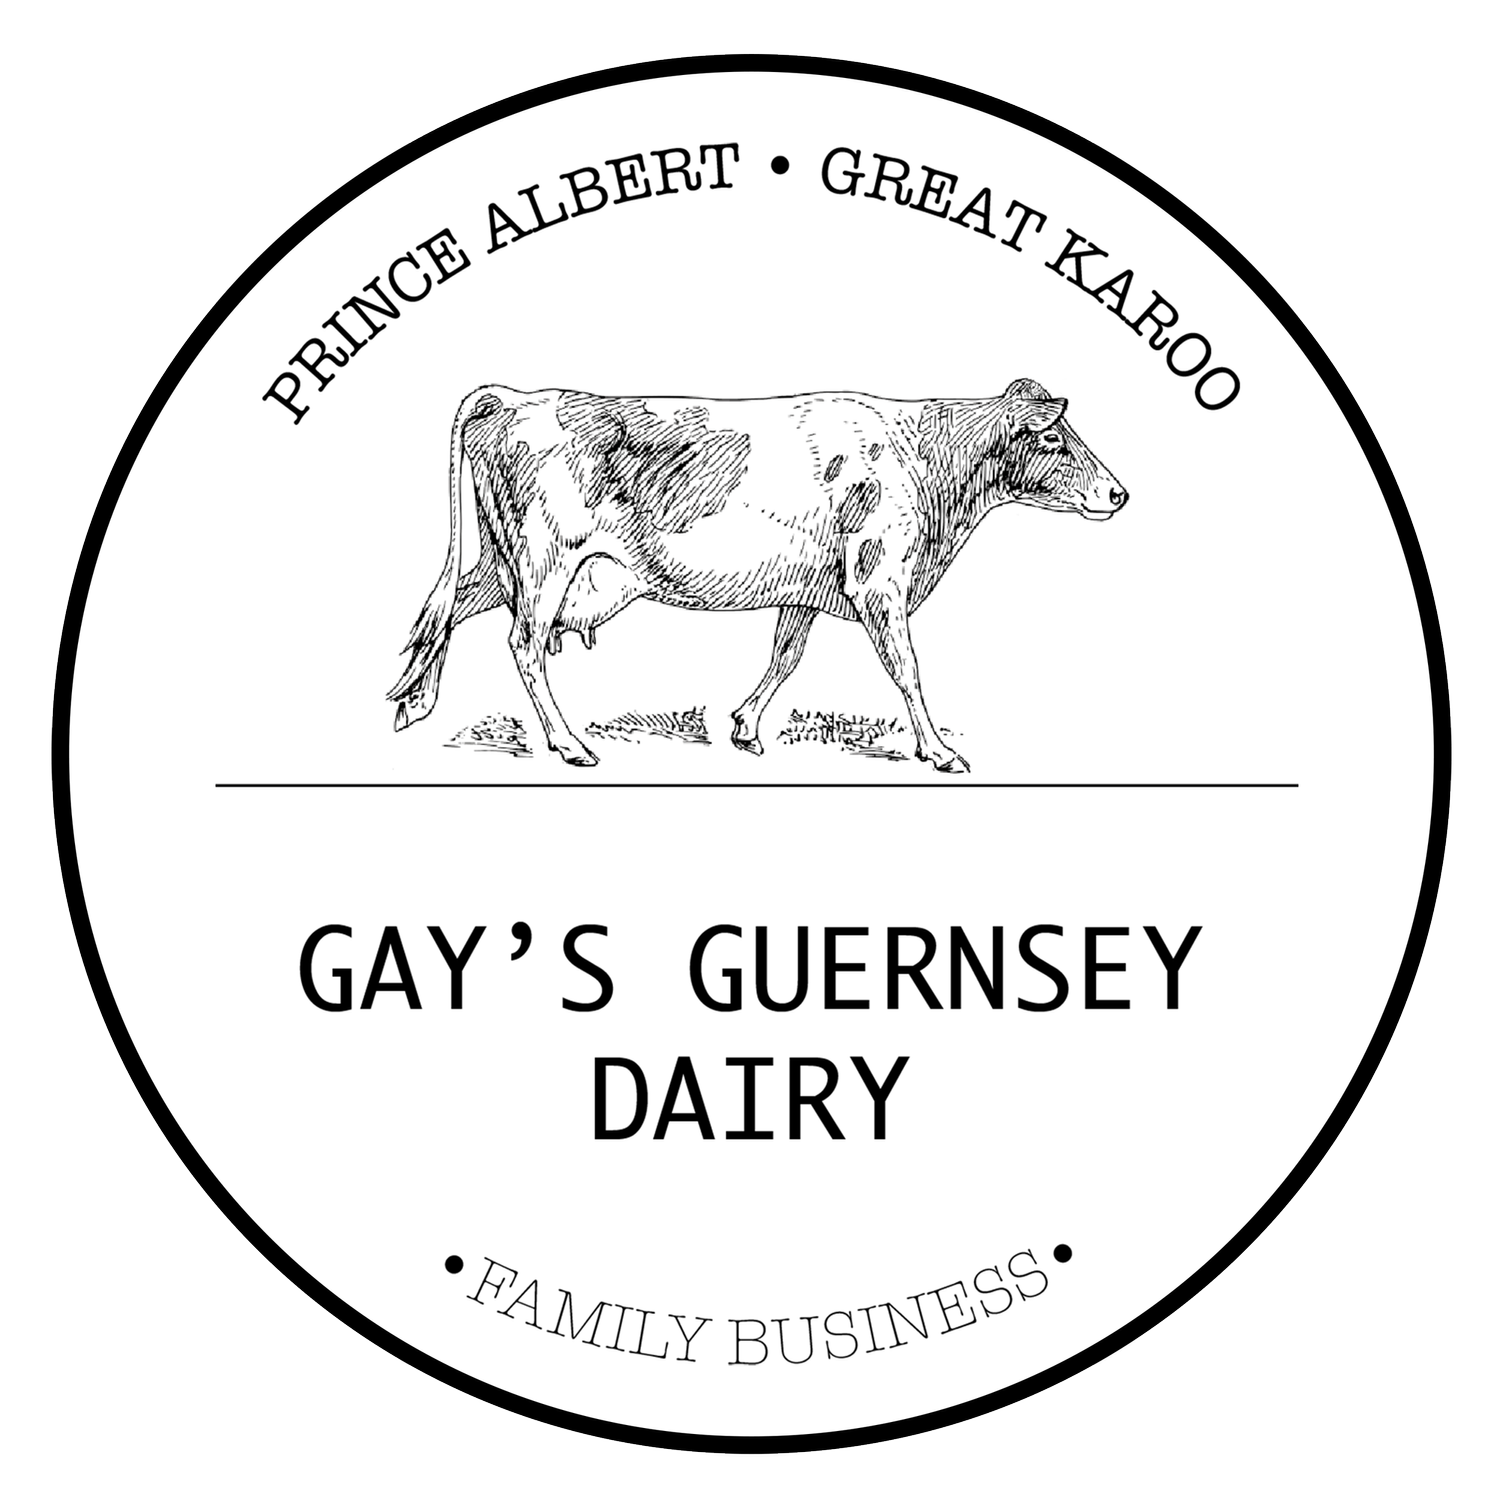 Gay's Guernsey Dairy